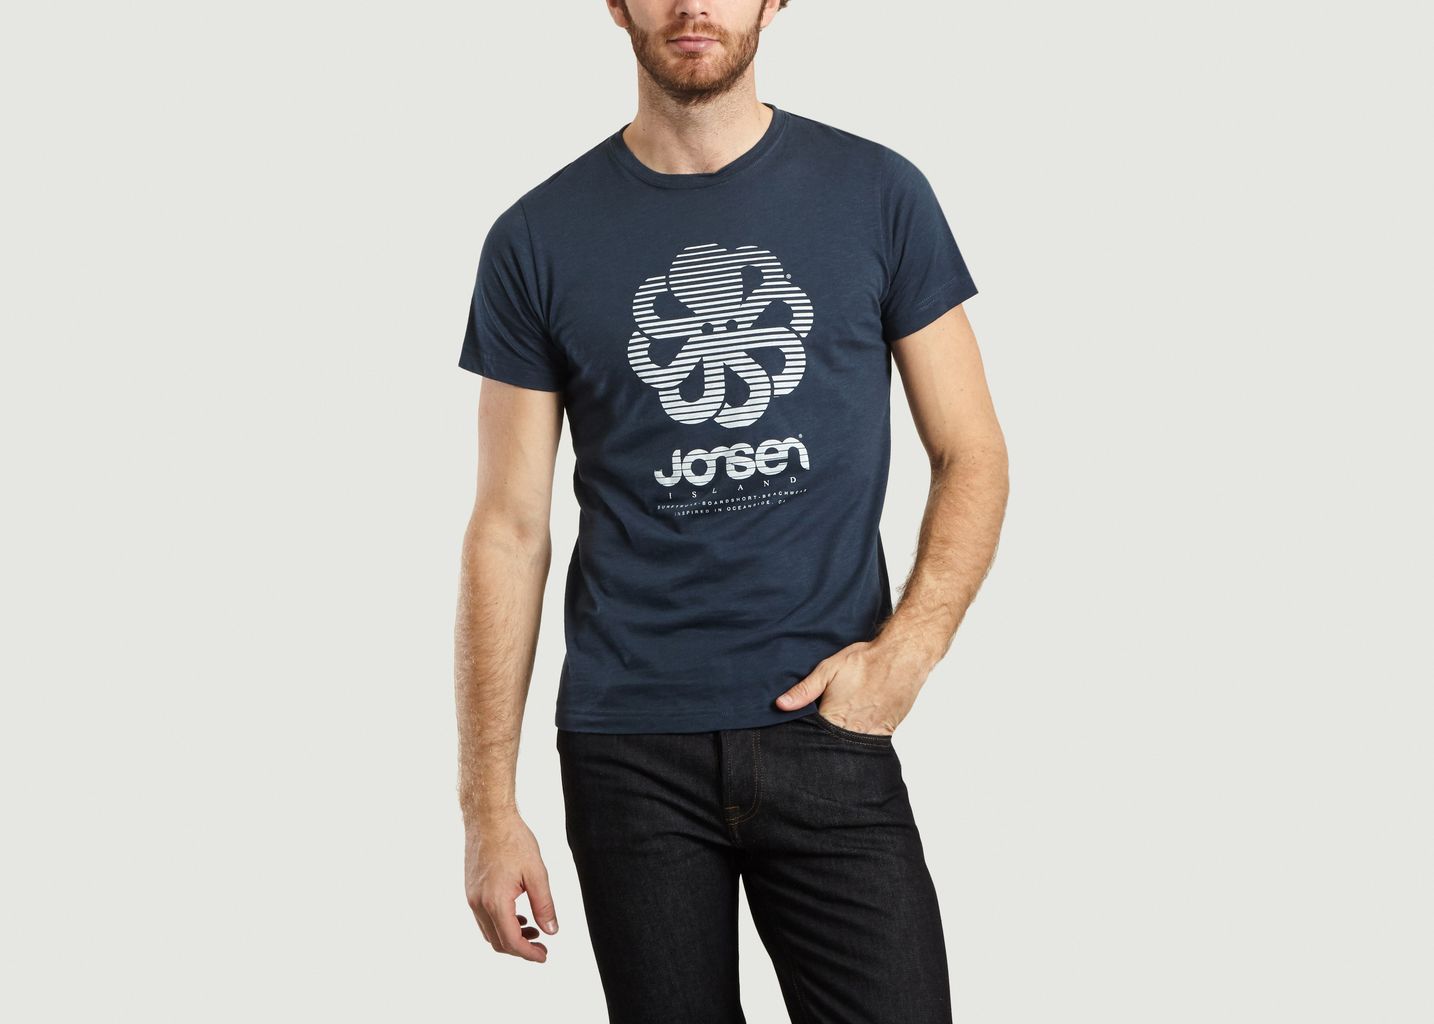 Classic Super Big T-shirt - Jonsen Island